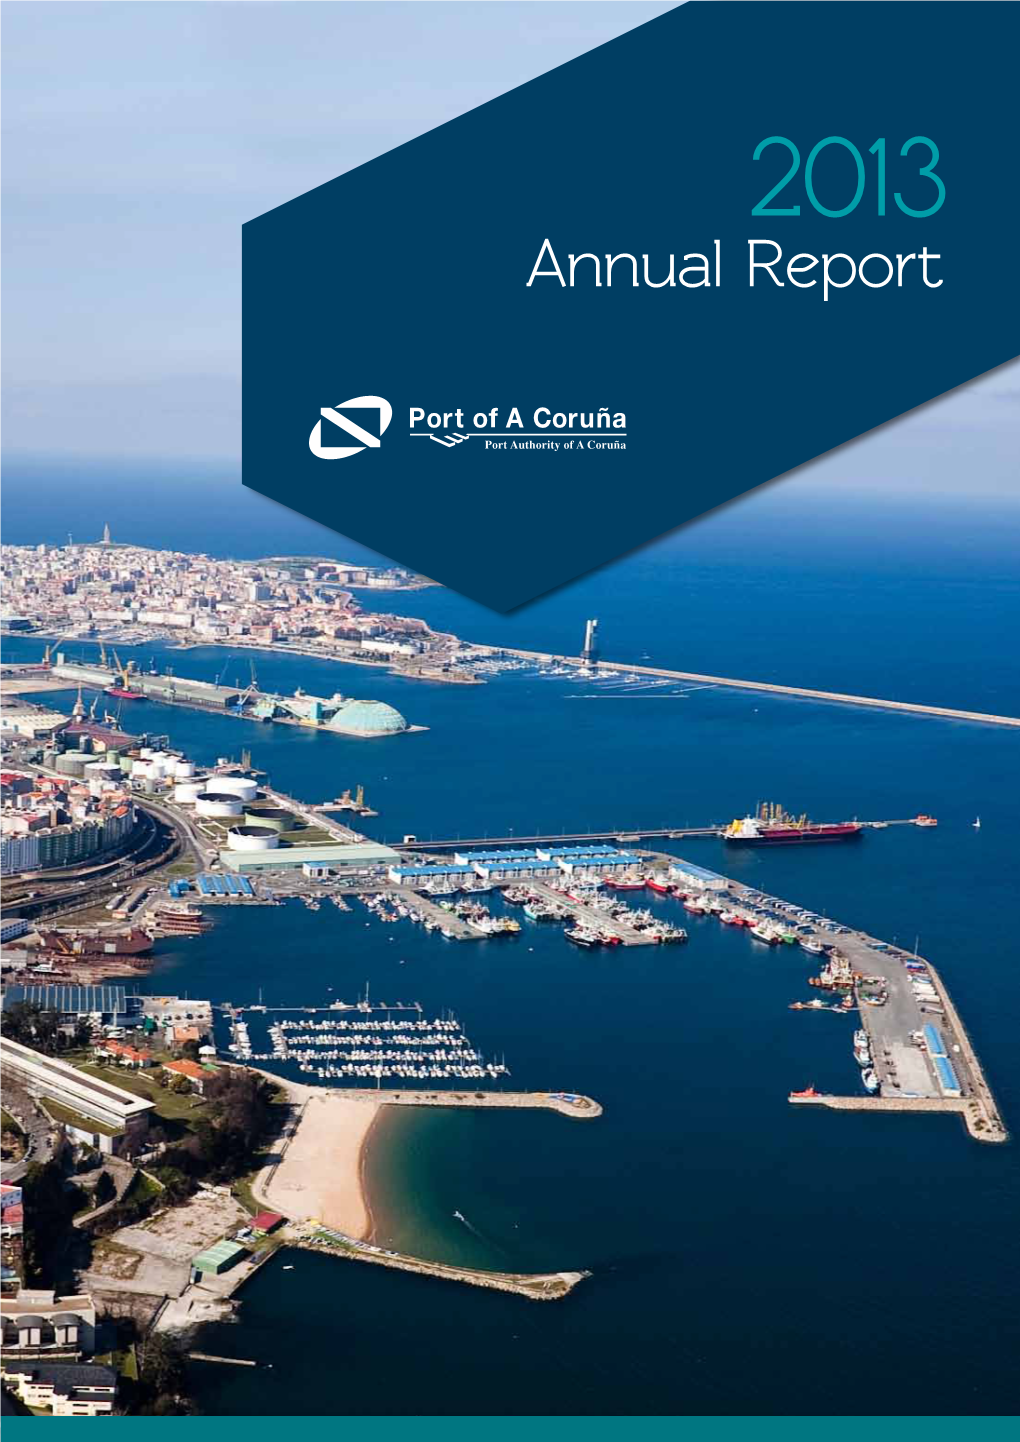 Annual Report Summary 2013